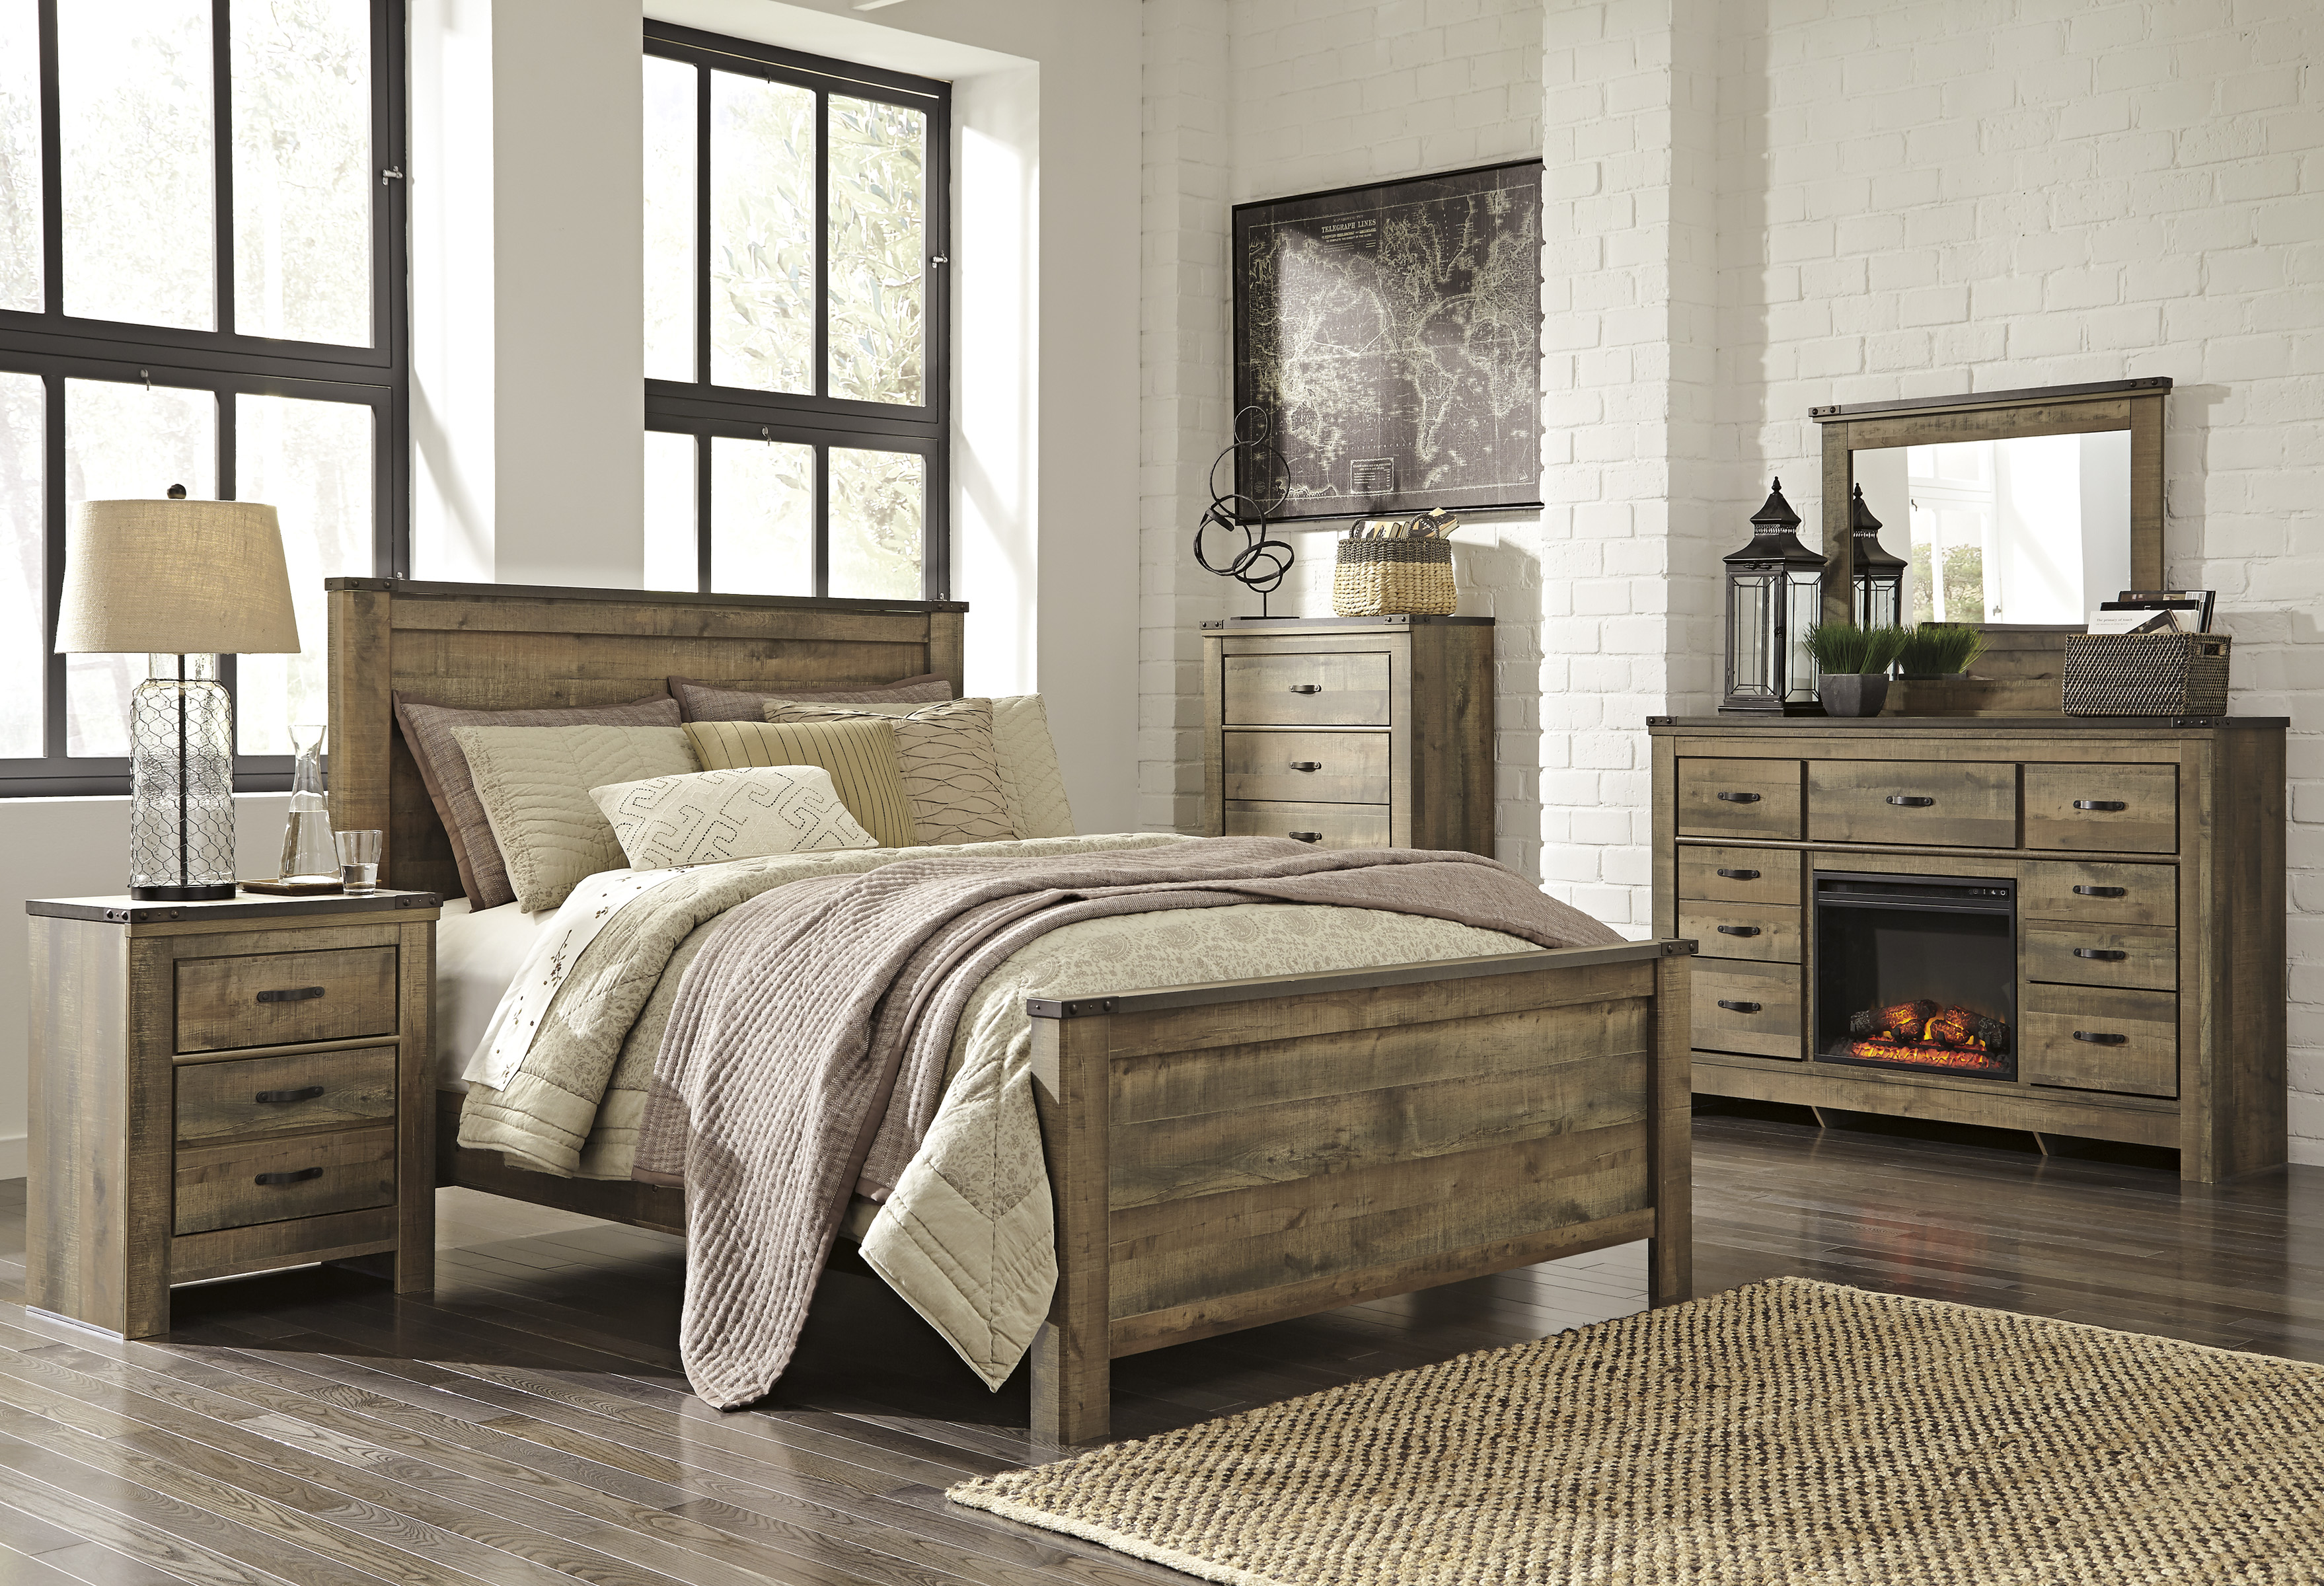 barnwood look bedroom furniture armoire